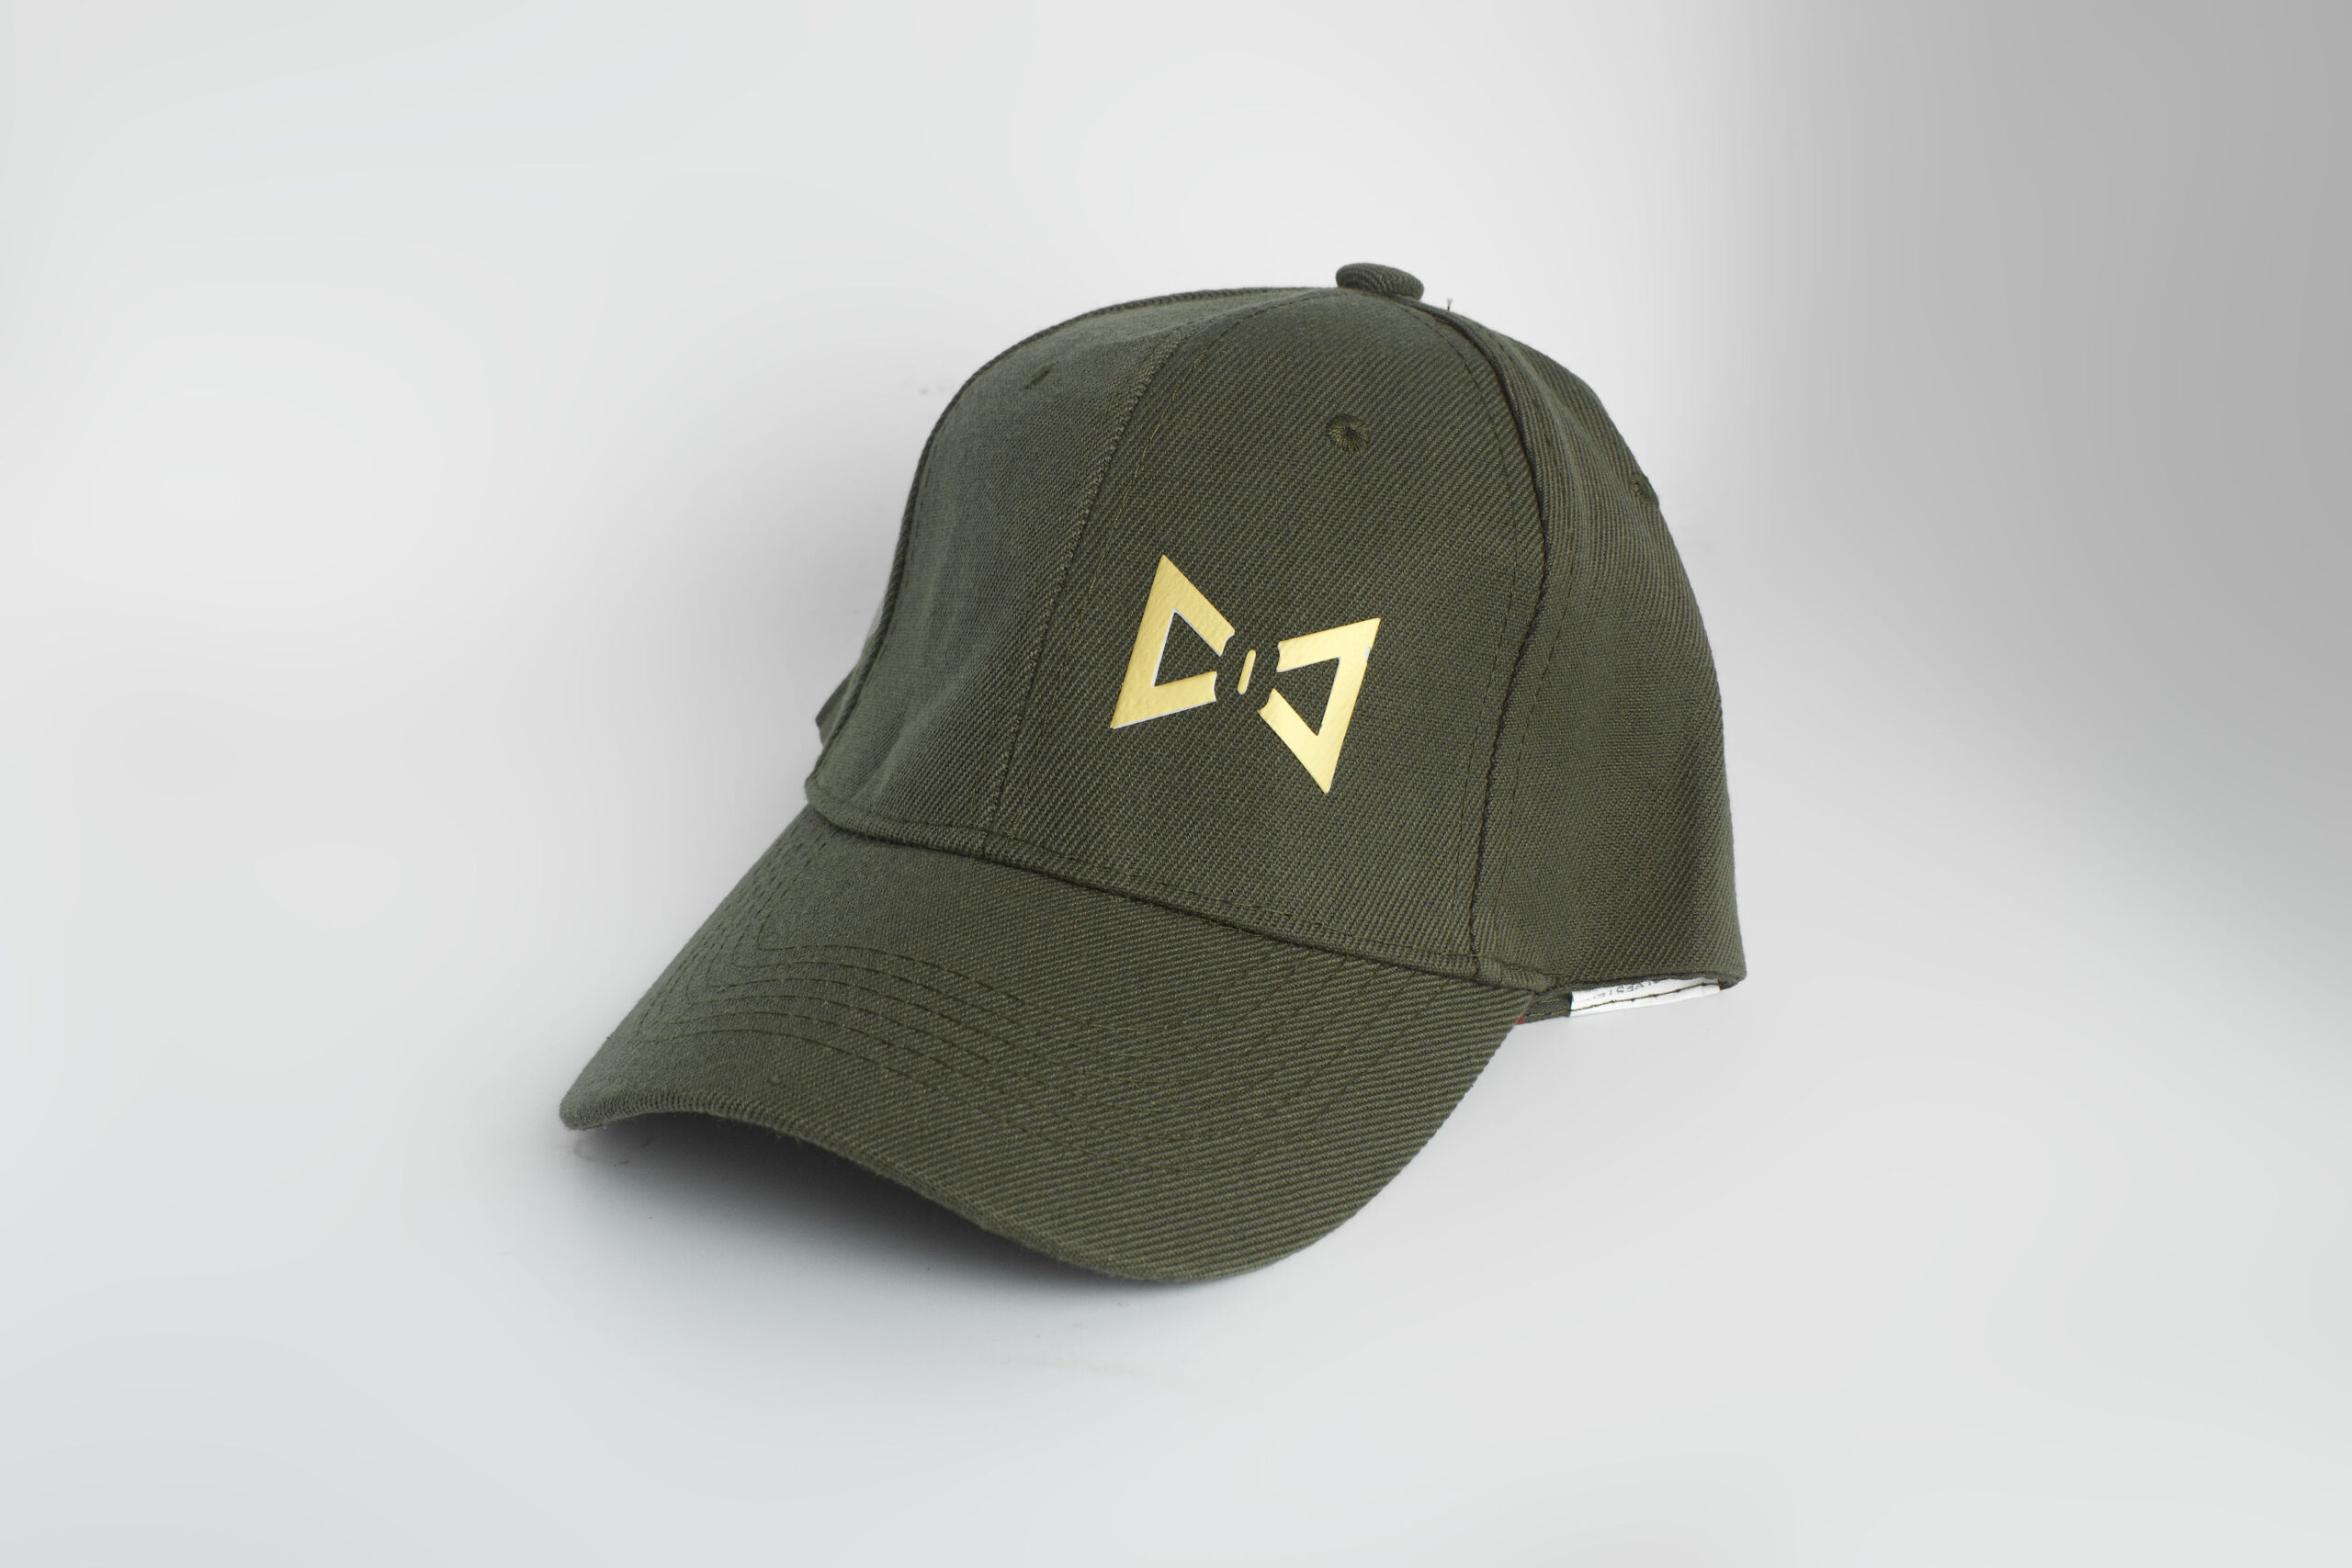 The-indulgence-Army-Green-baseball-cap